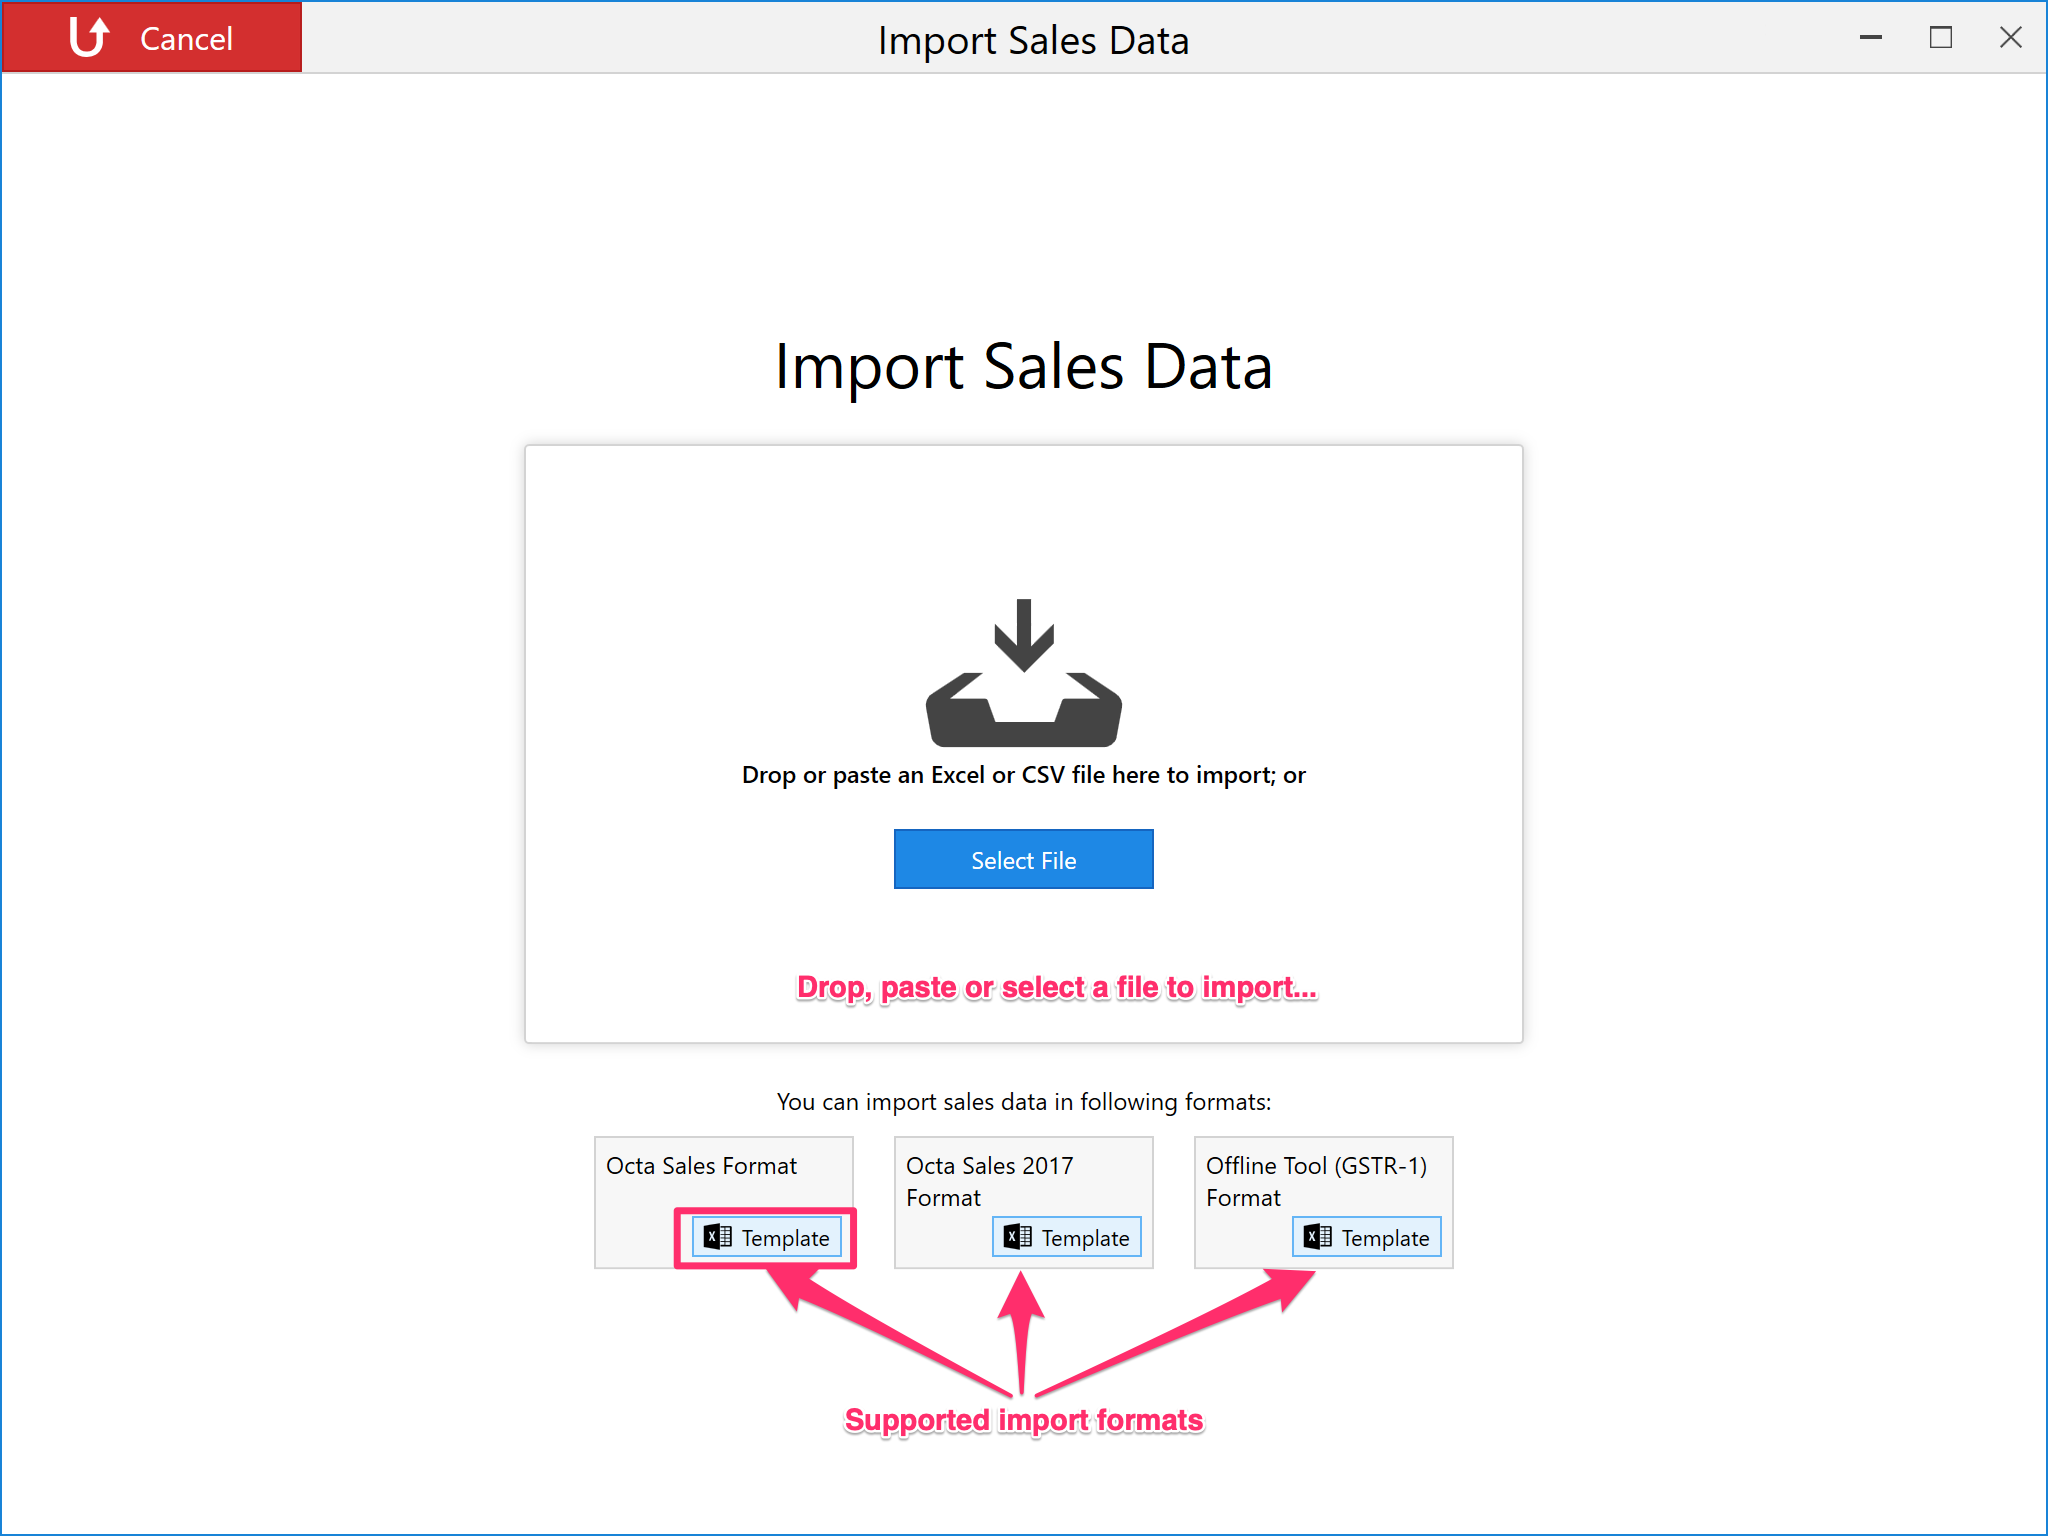 Sales import in Octa format